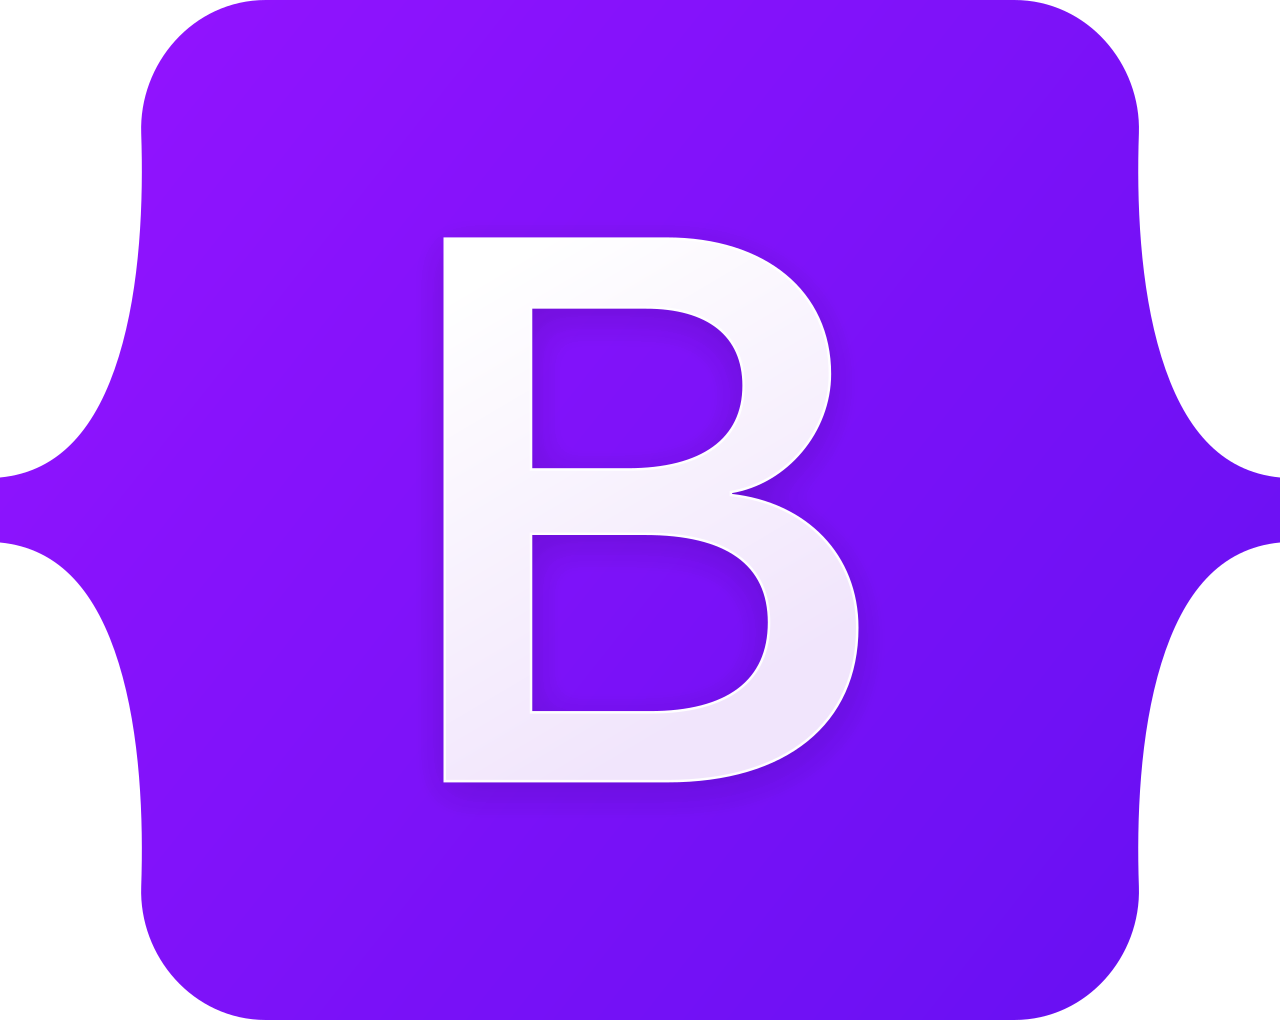 Bootstrap logo.svg - Wikimedia Commons